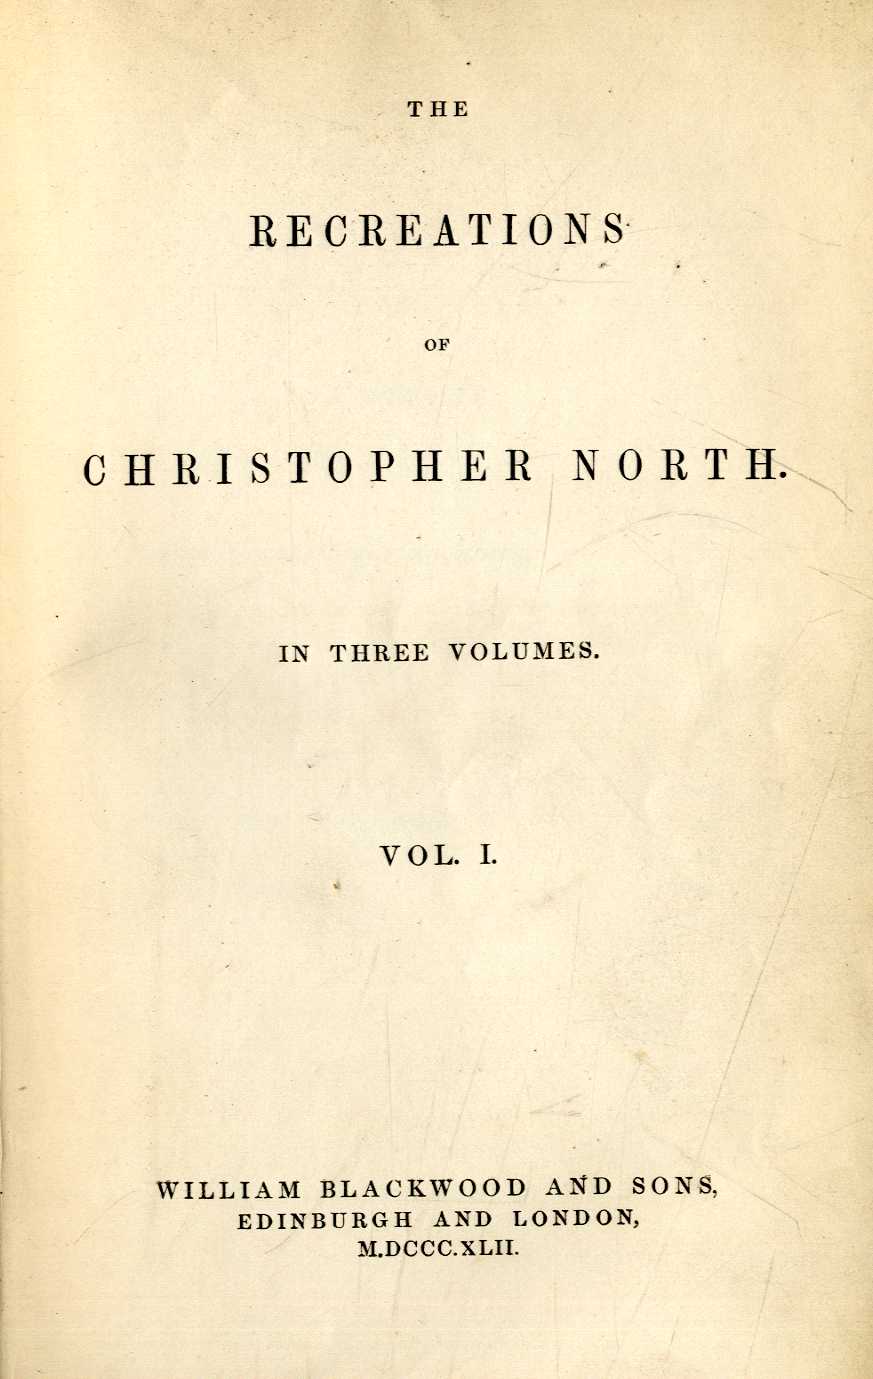 [Wilson (John)] The Recreations of Christopher North, 3 vols. 8vo L. (Wm. Blackwood) 1842, hf.